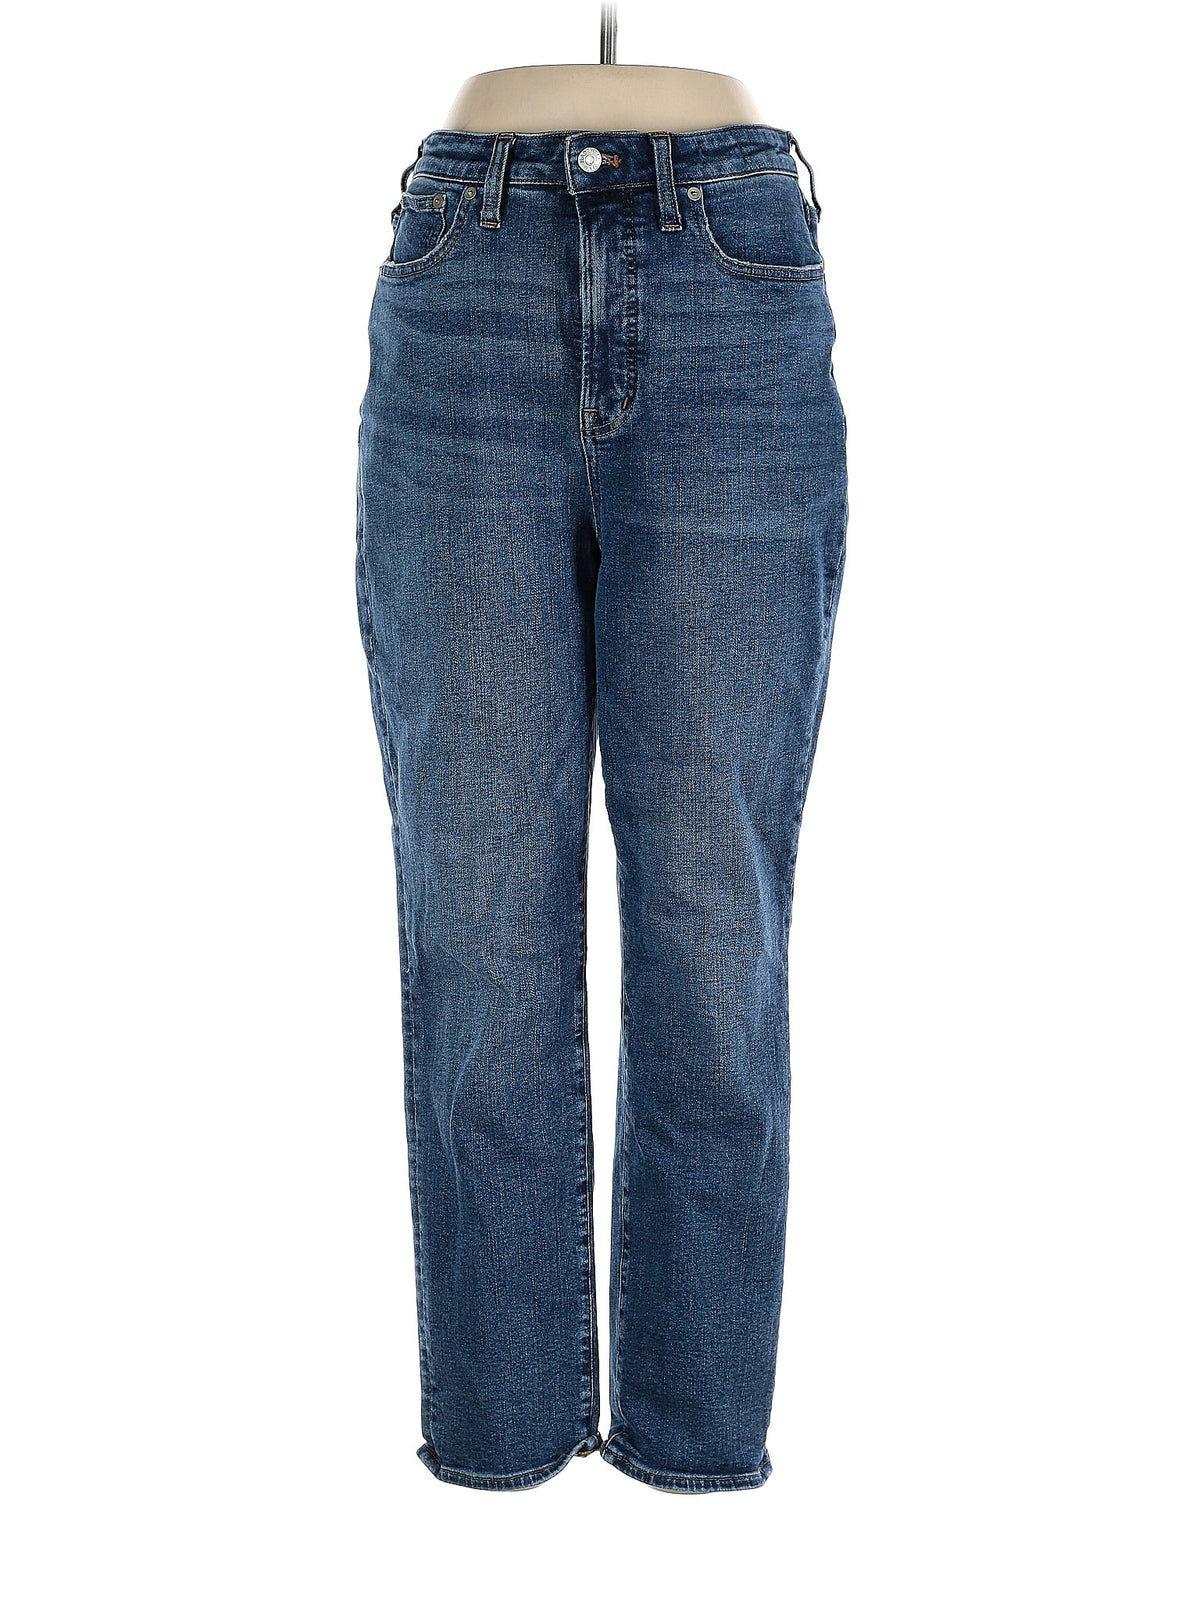 High-Rise Straight-leg Jeans in Medium Wash waist size - 28